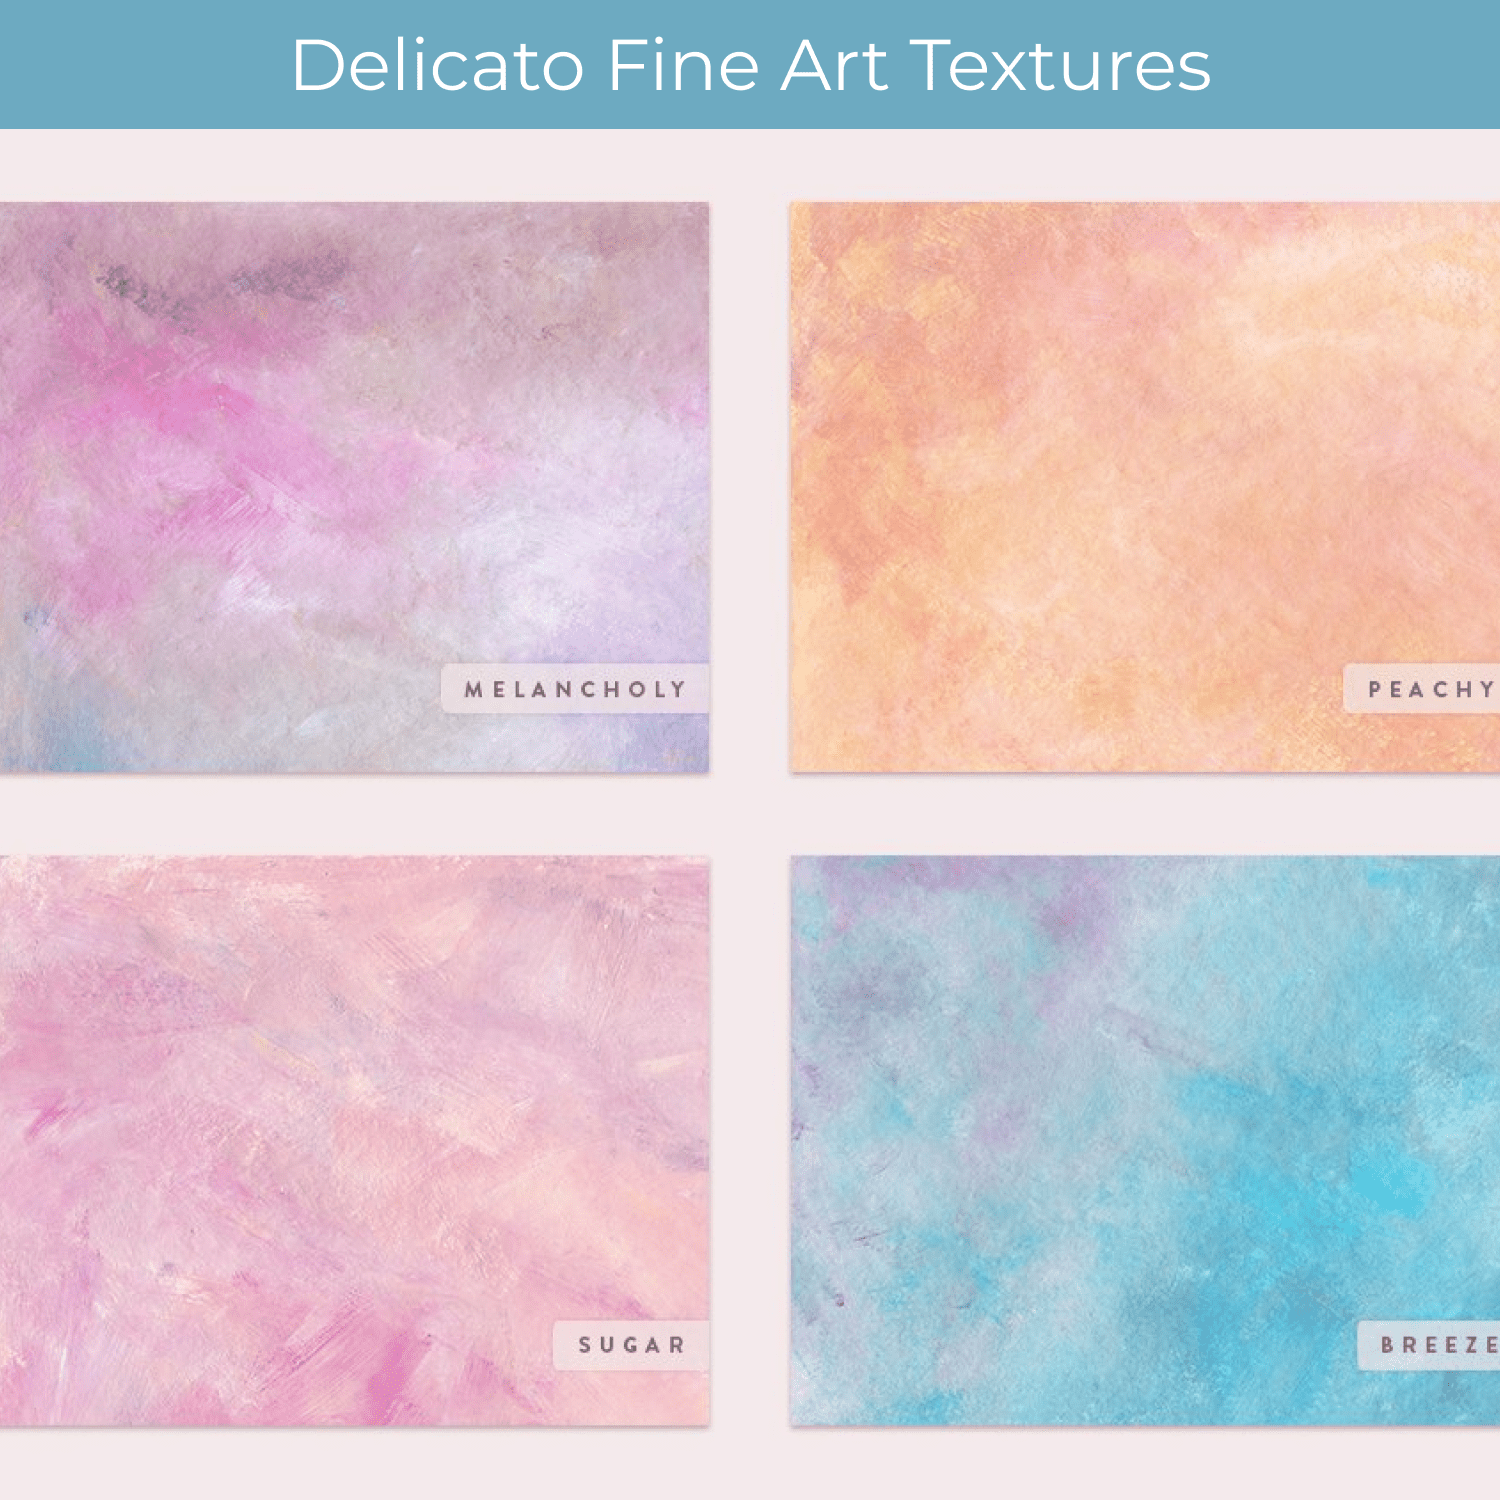 Delicato Fine Art Textures.